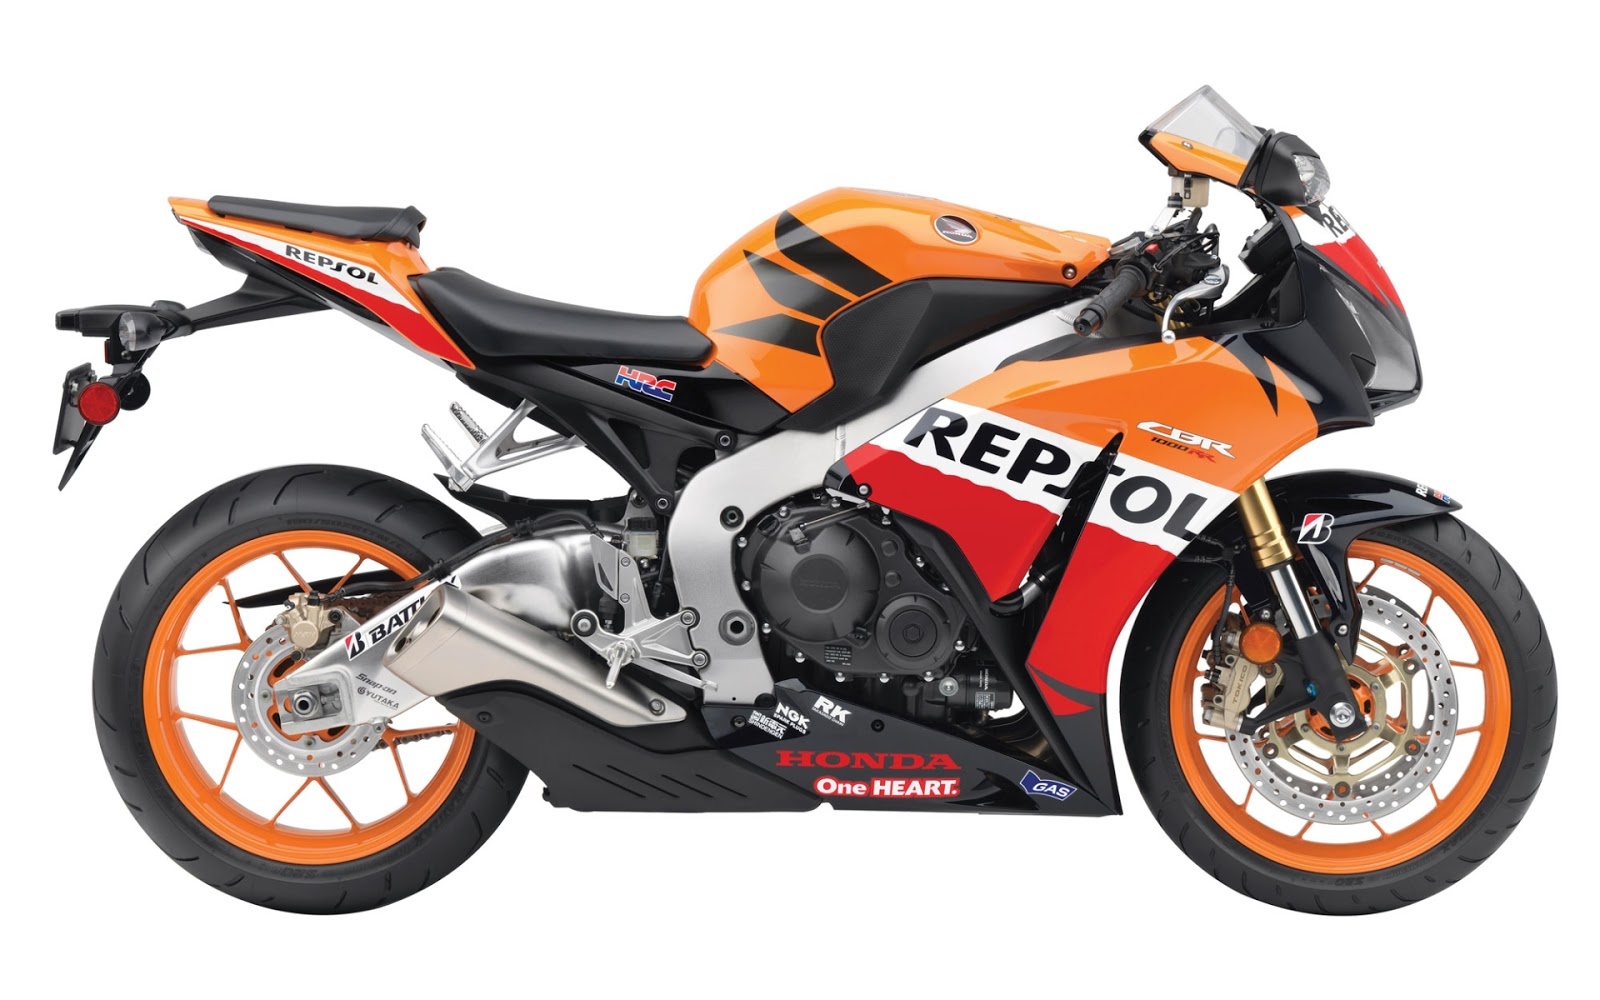 Commodo gauche superbike moto gp 5 fonctions CBR1000RR 2012-2016